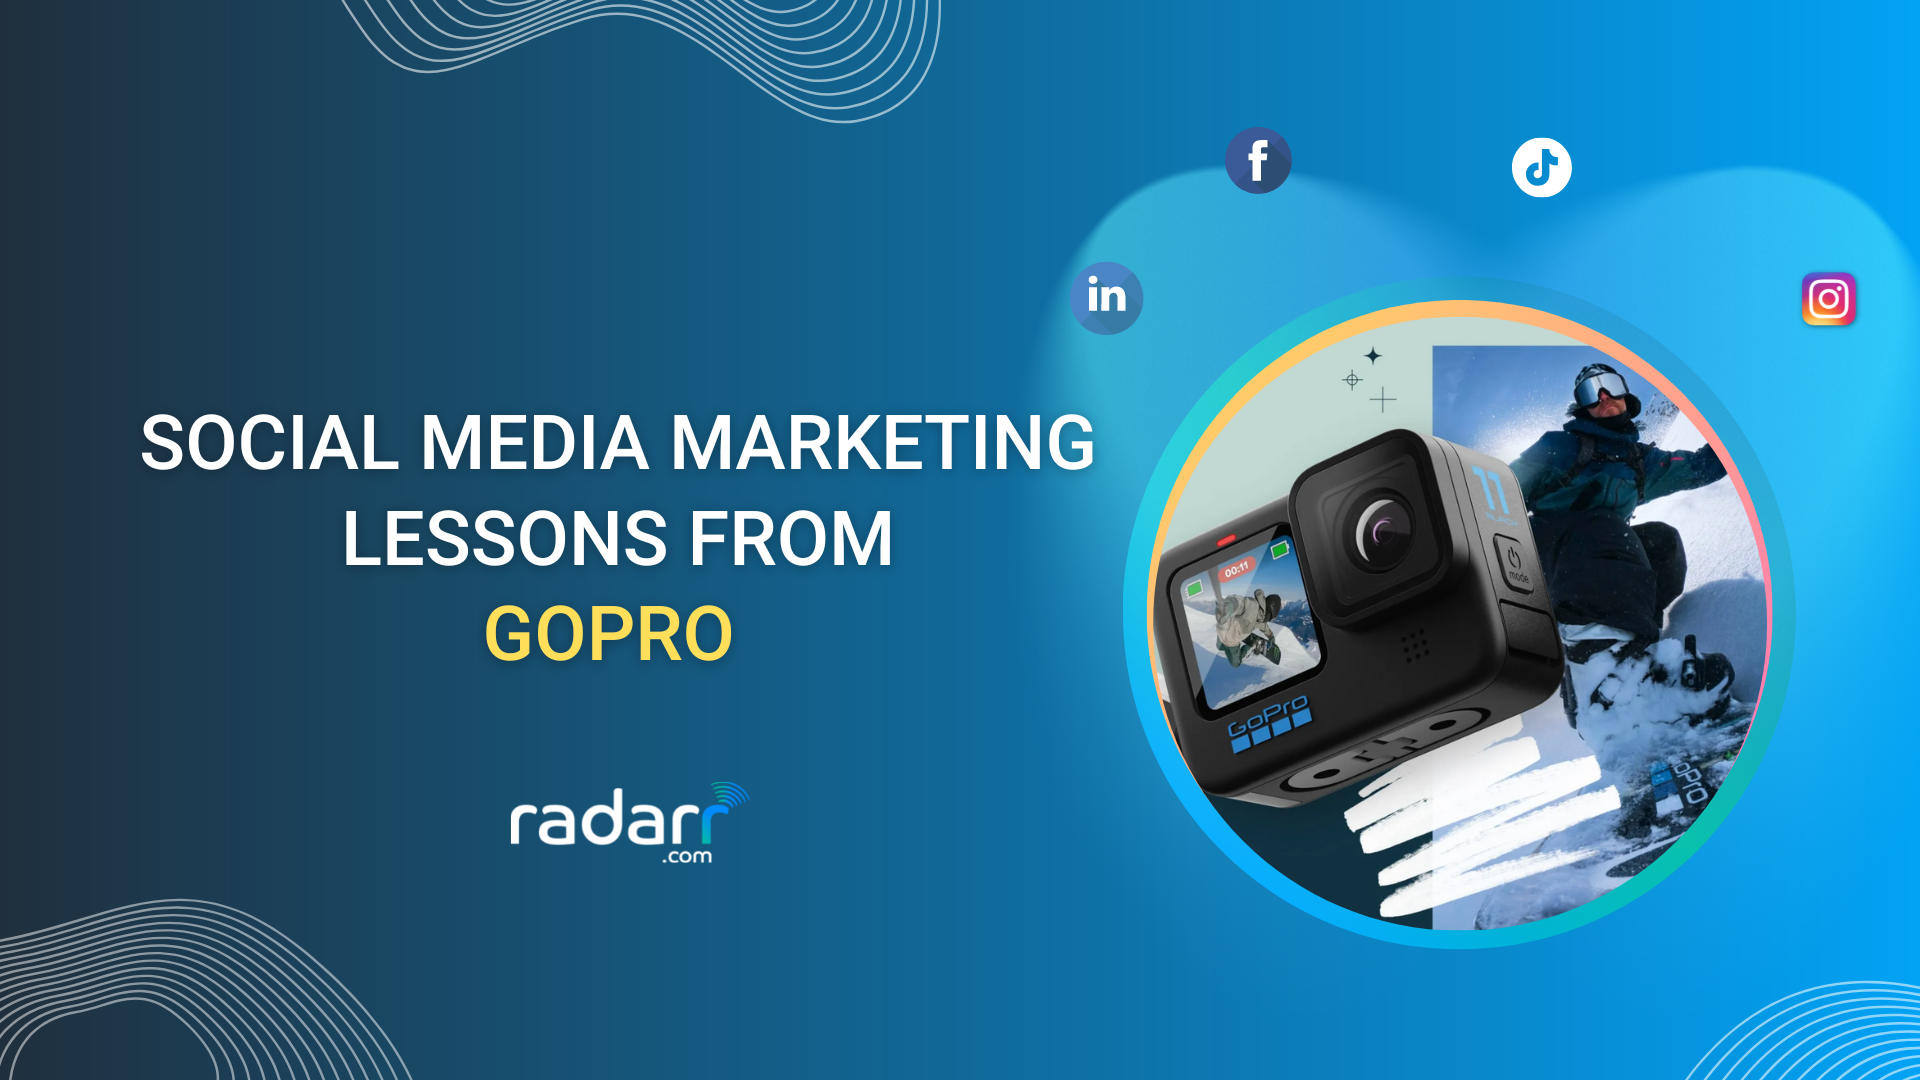 gopro social media strategy for marketing